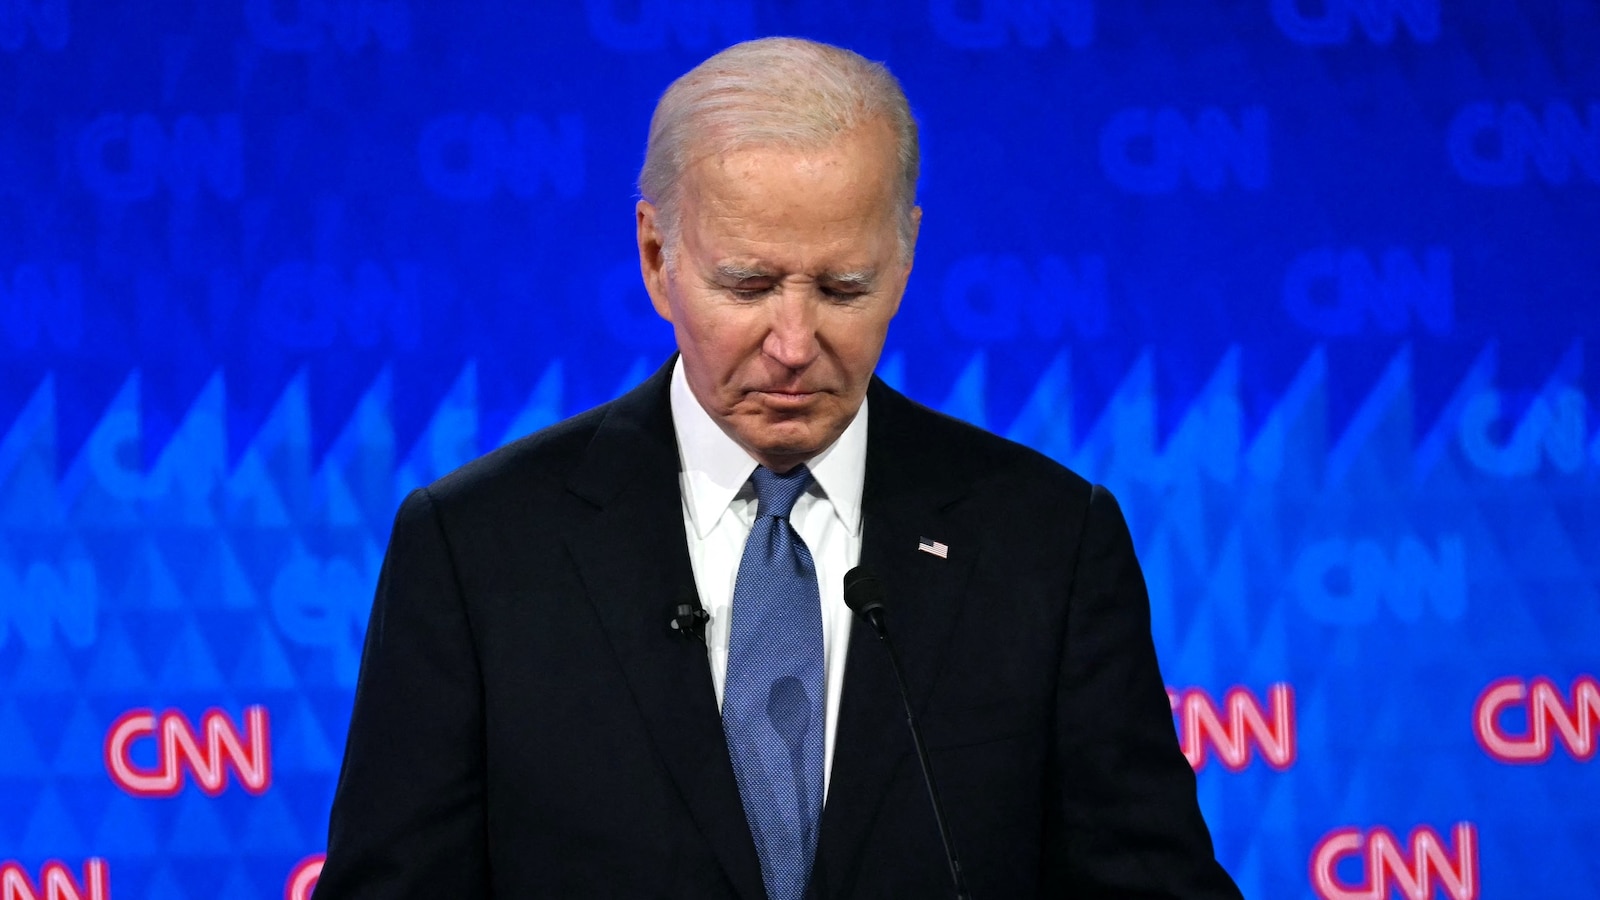 Can Biden bounce back from rough debate?